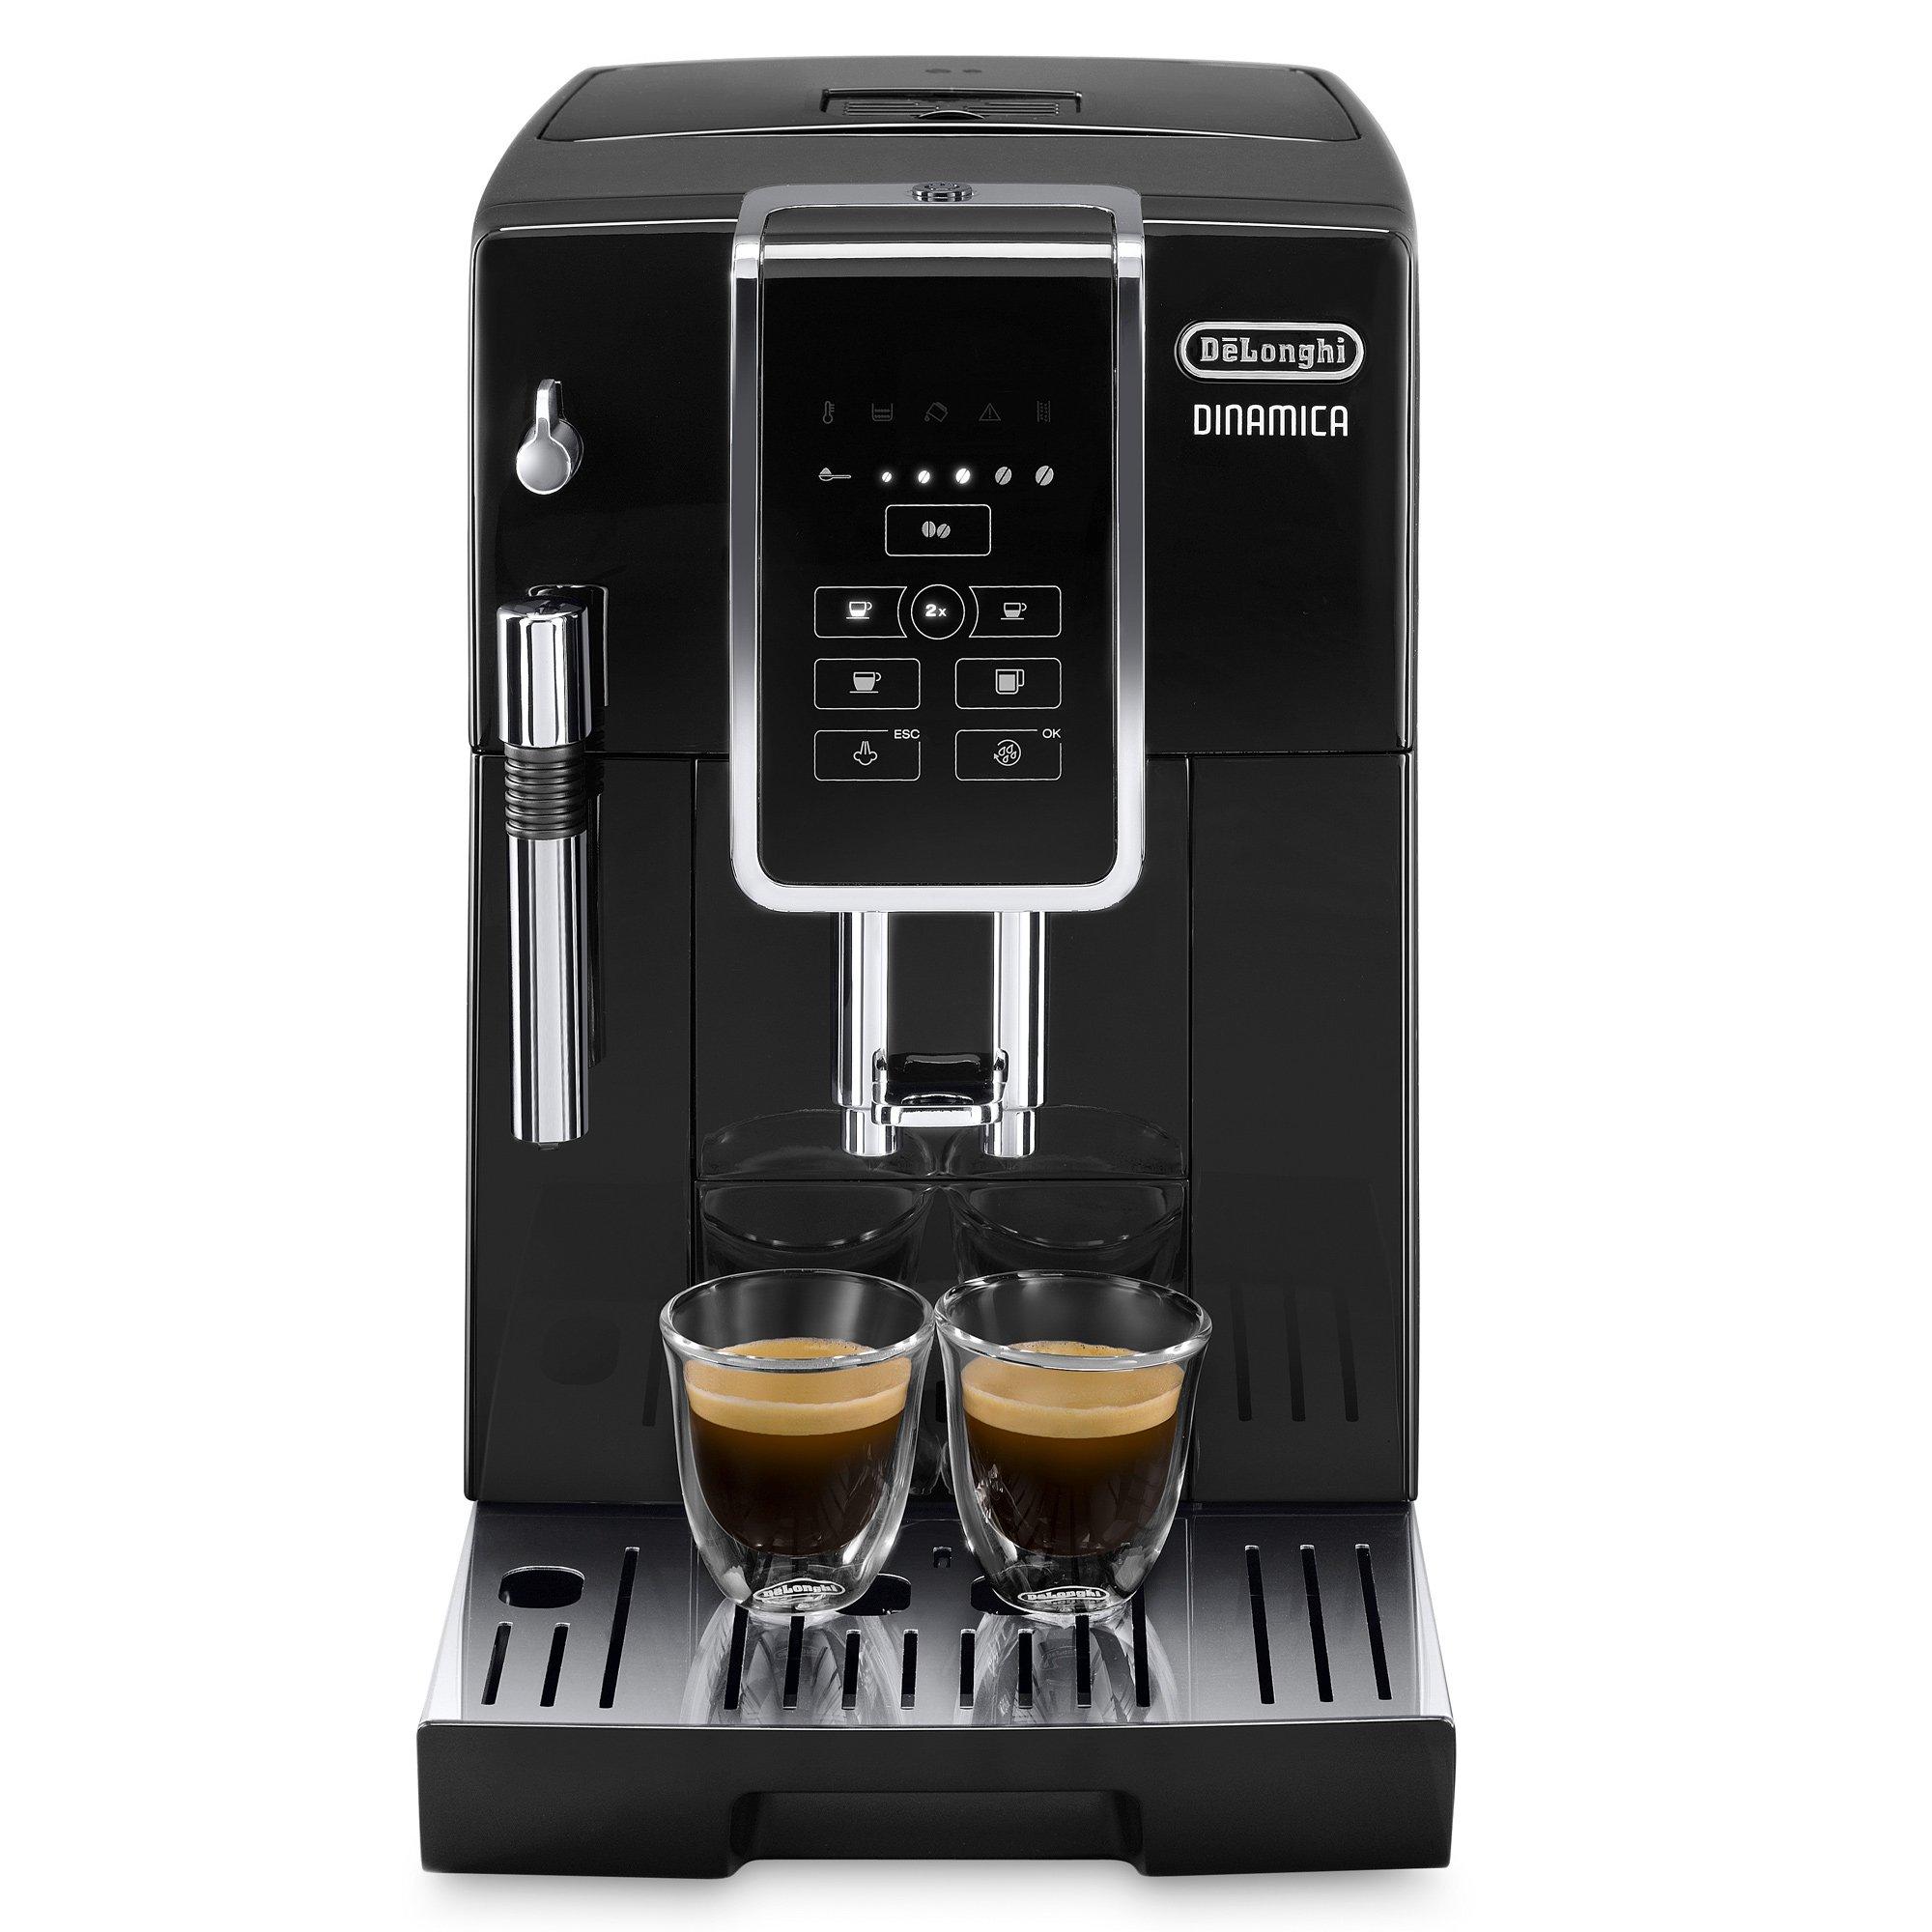 De Longhi ECAM 350 15 B Dinamica machines a cafe automatiques